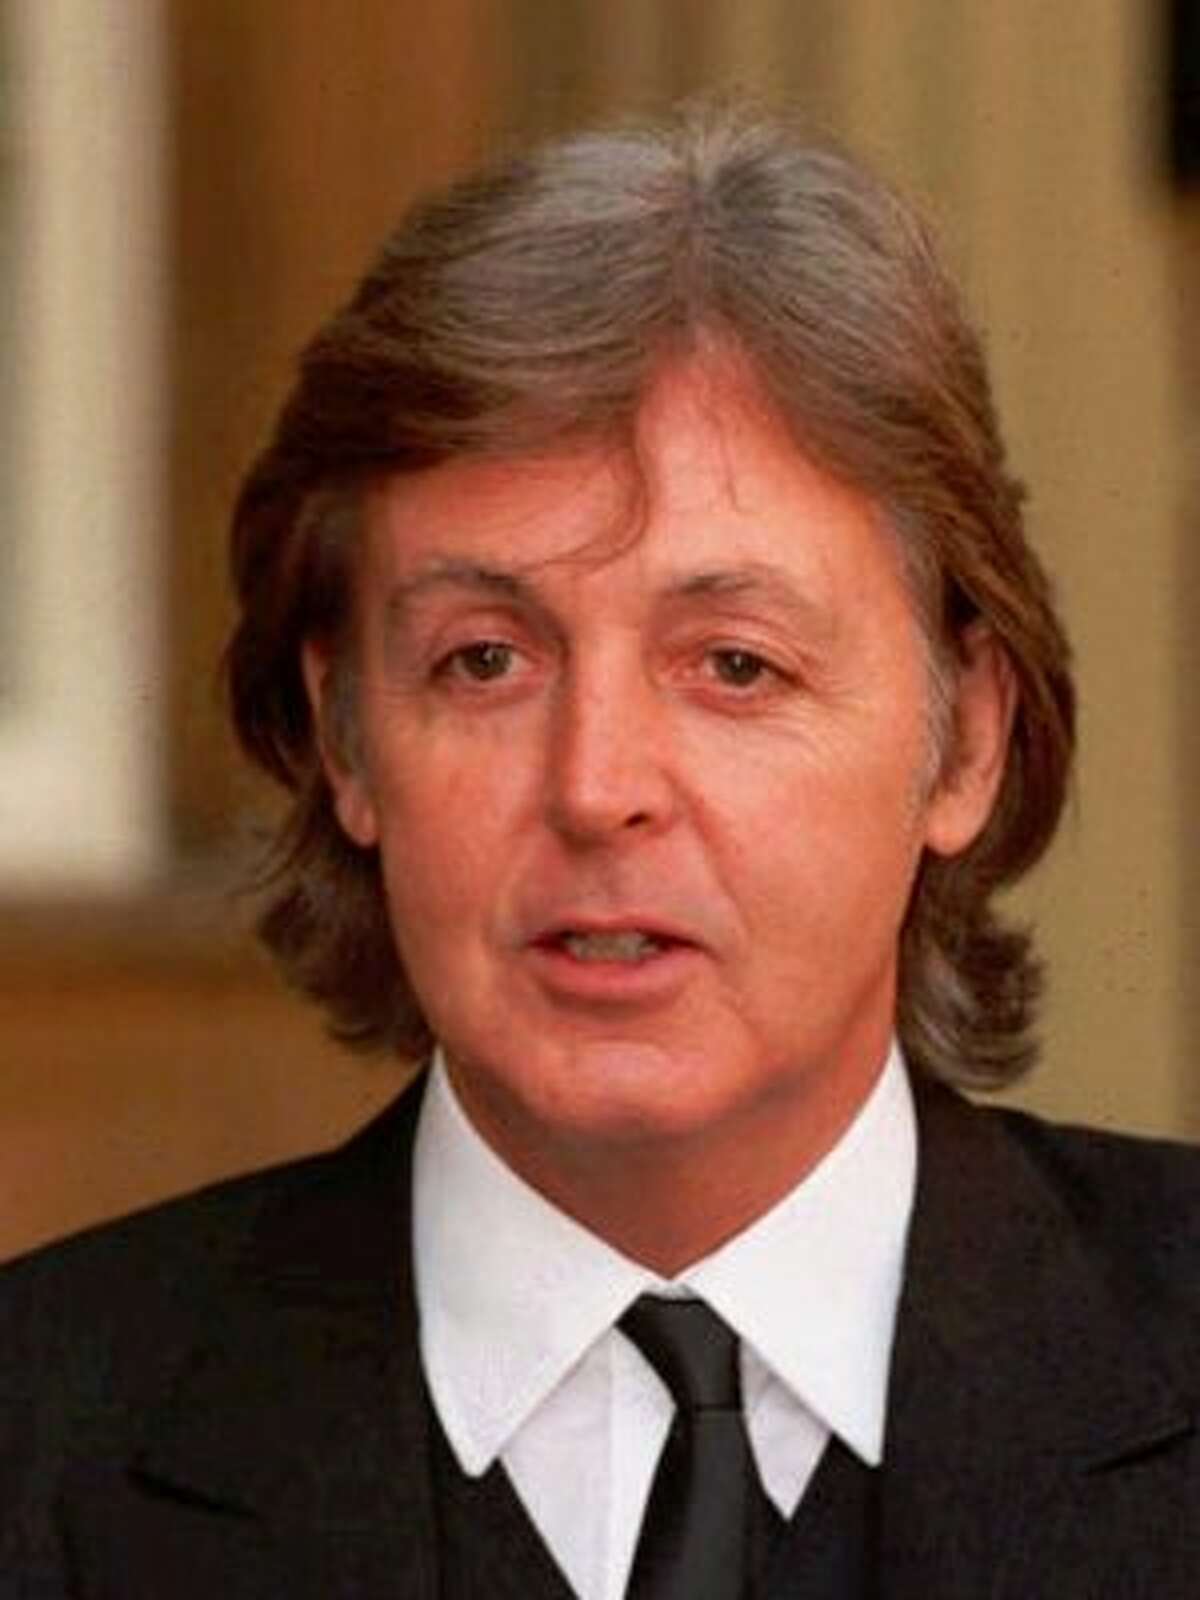 Rock legend McCartney to play Safeco Field